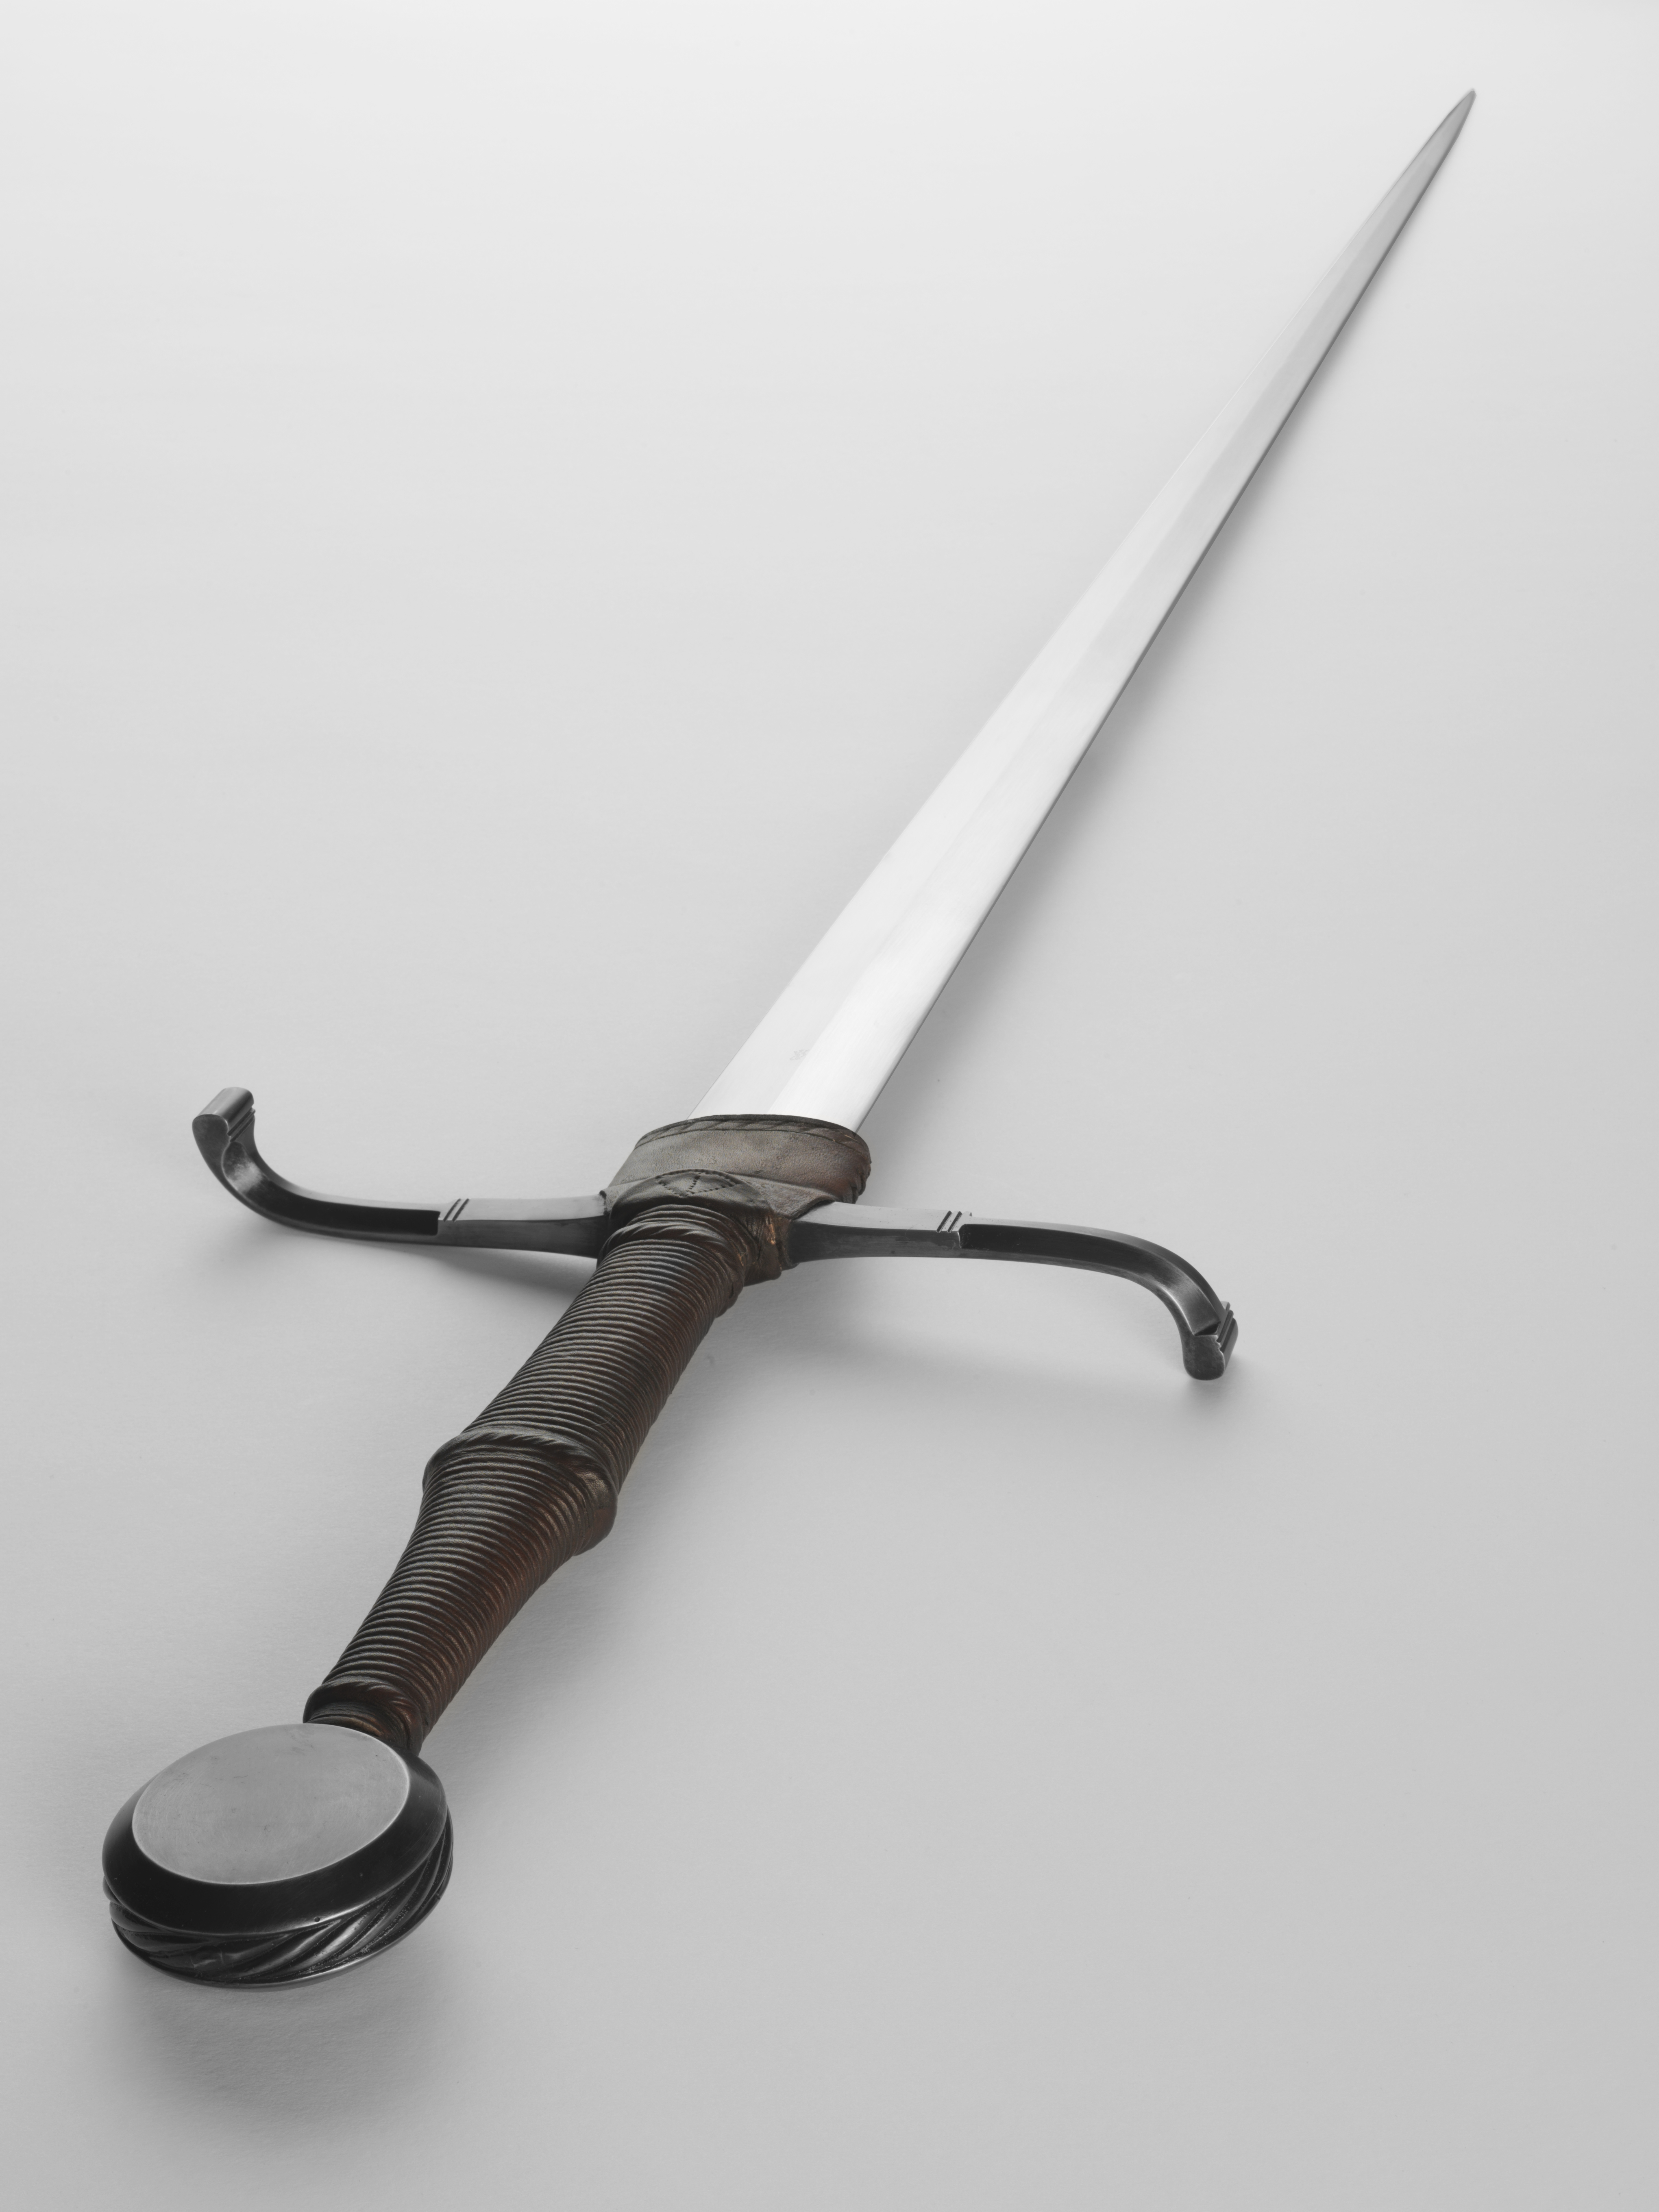 swords 1591px x 1144px 116 kb medieval swords 450px x 529px 83 kb